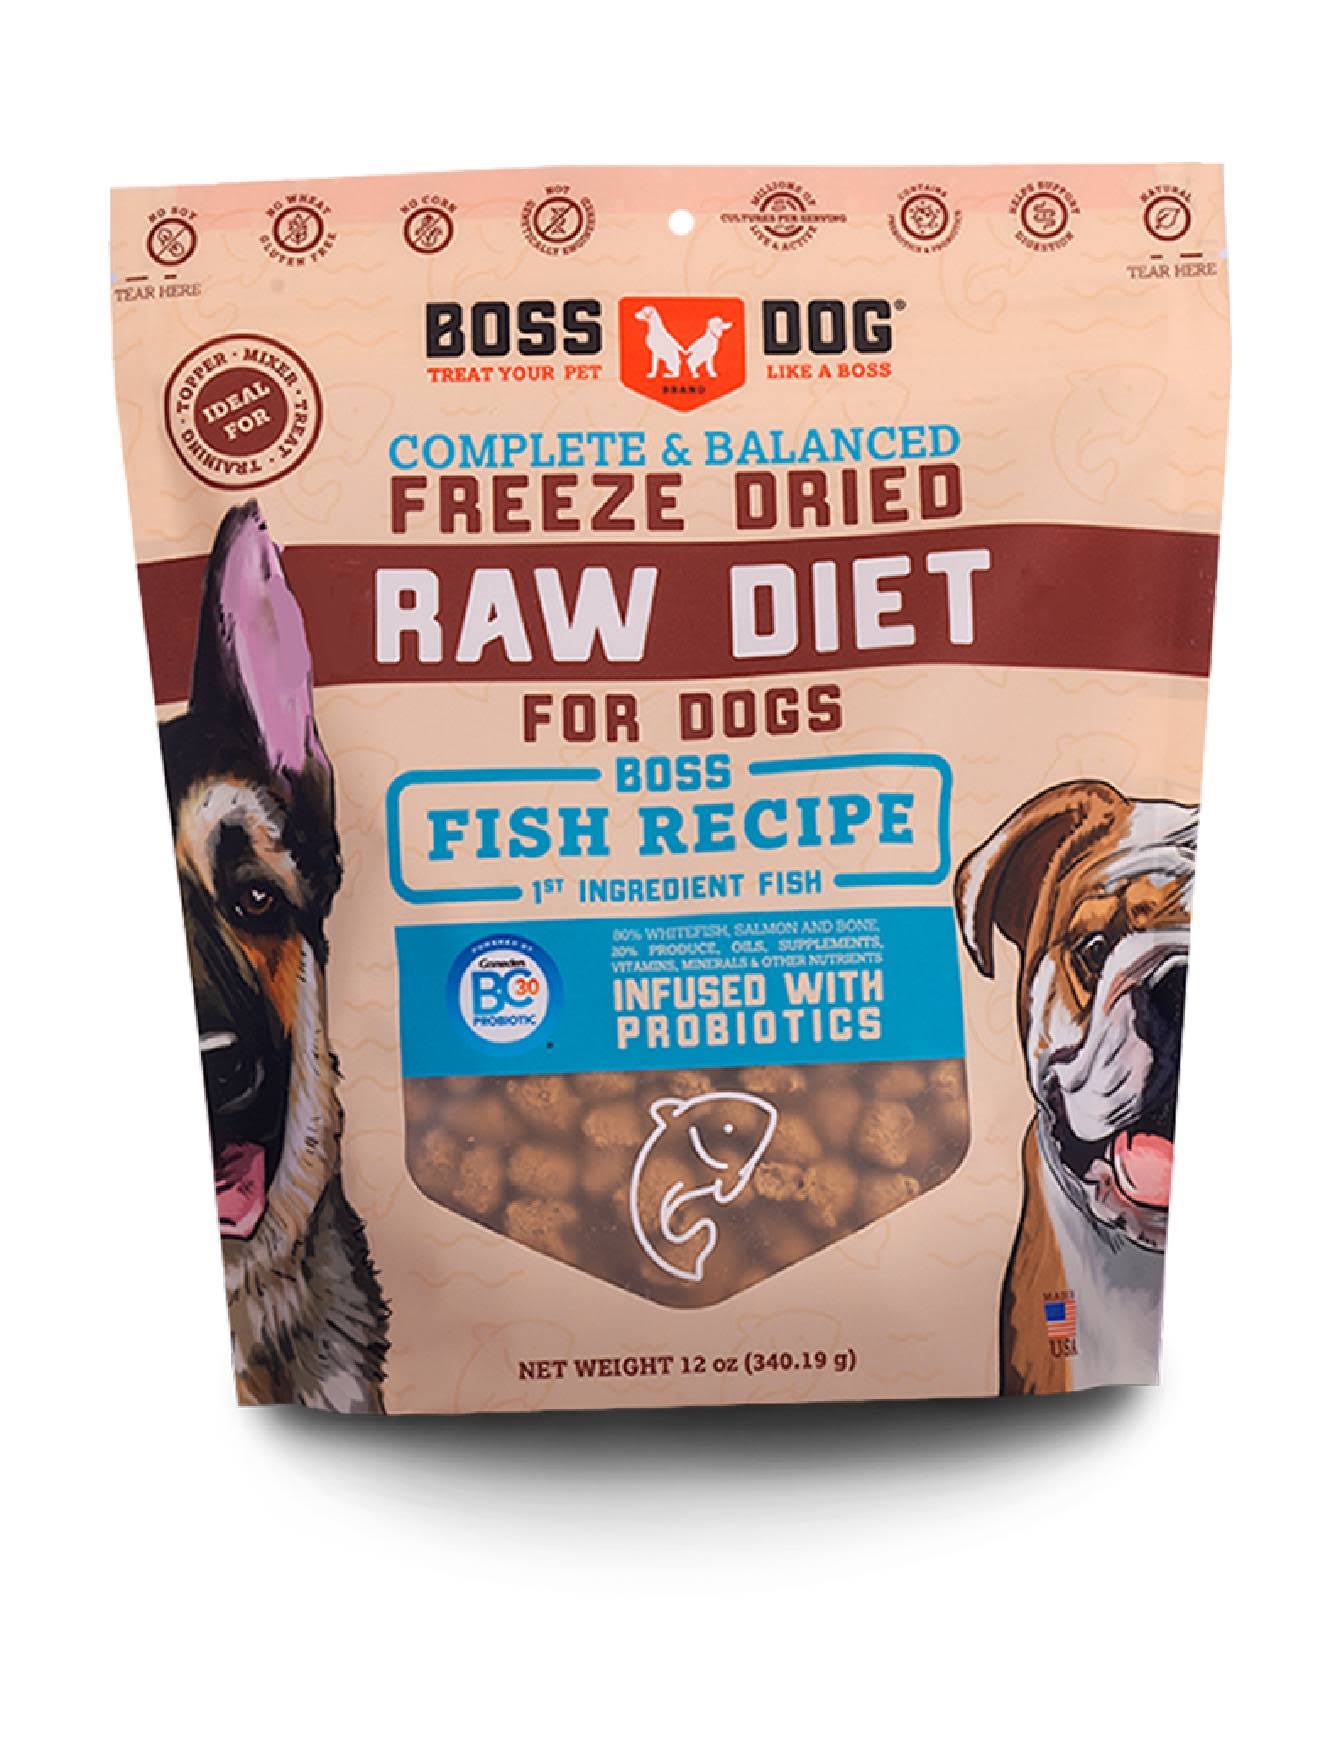 Boss Dog Freeze-Dried Fish Recipe Dog Food - 12 oz. Bag